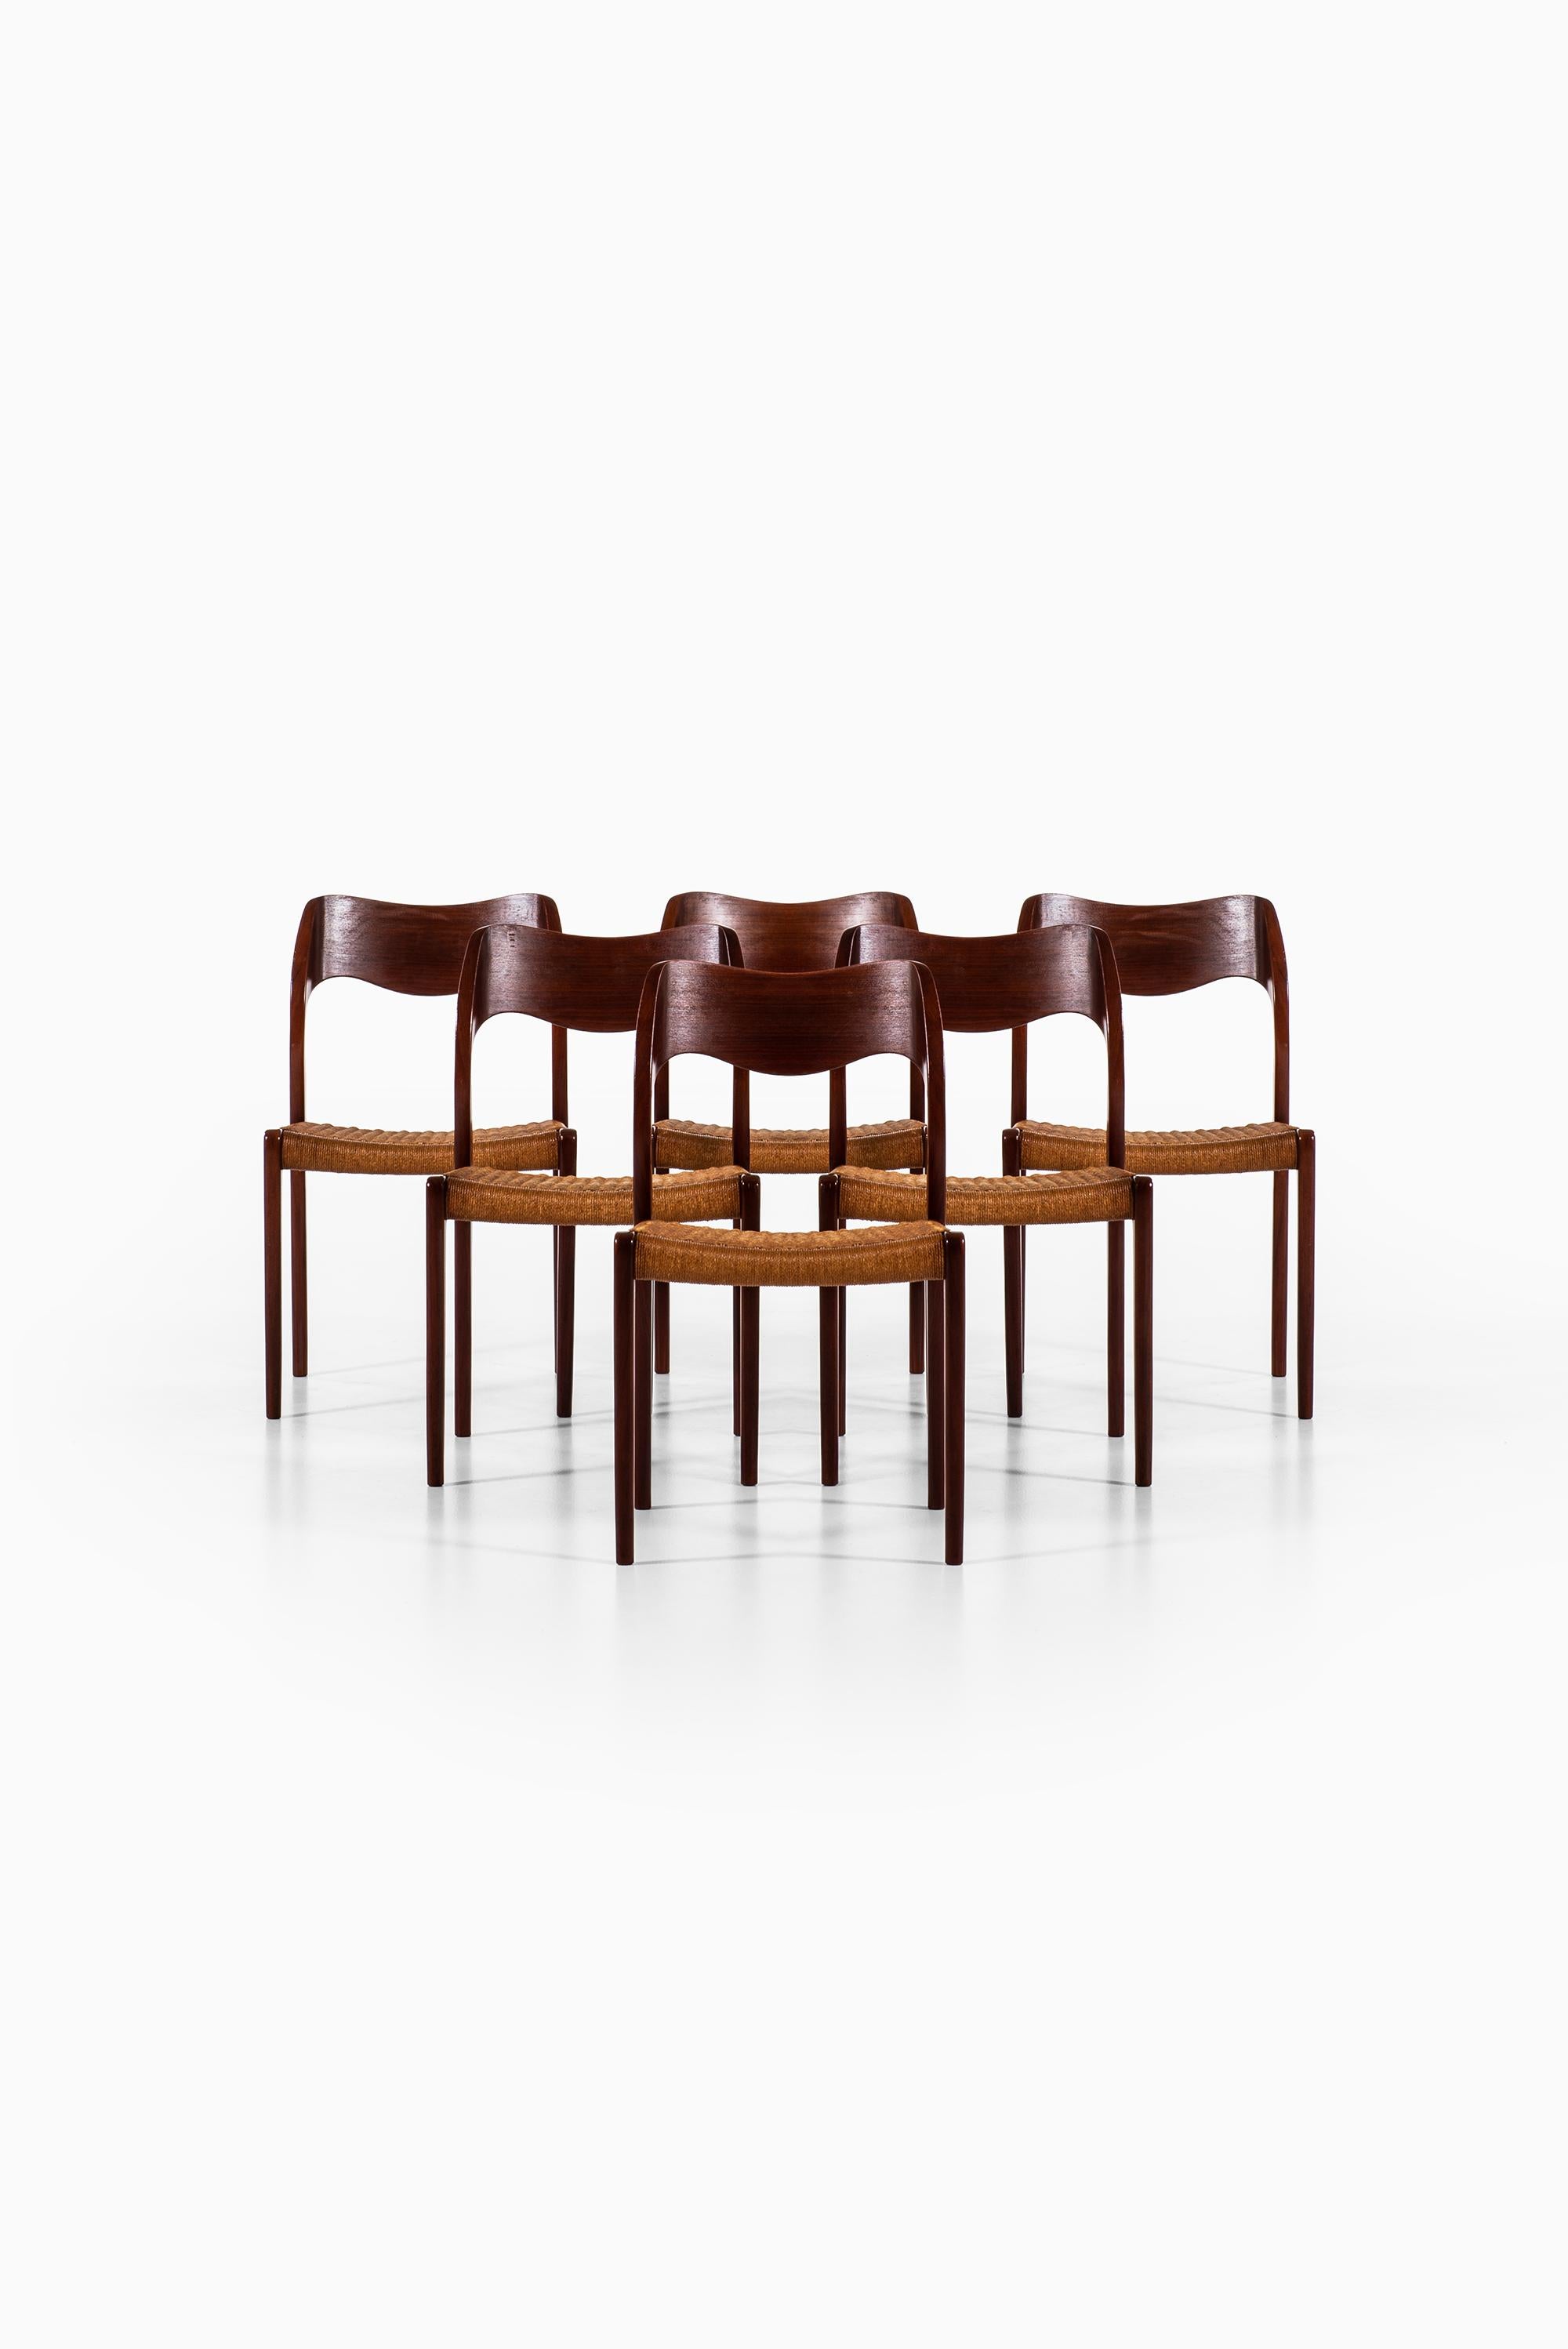 Set of 6 dining chairs model 71 designed by Niels O. Møller. Produced by J.L Møllers Møbelfabrik in Denmark.